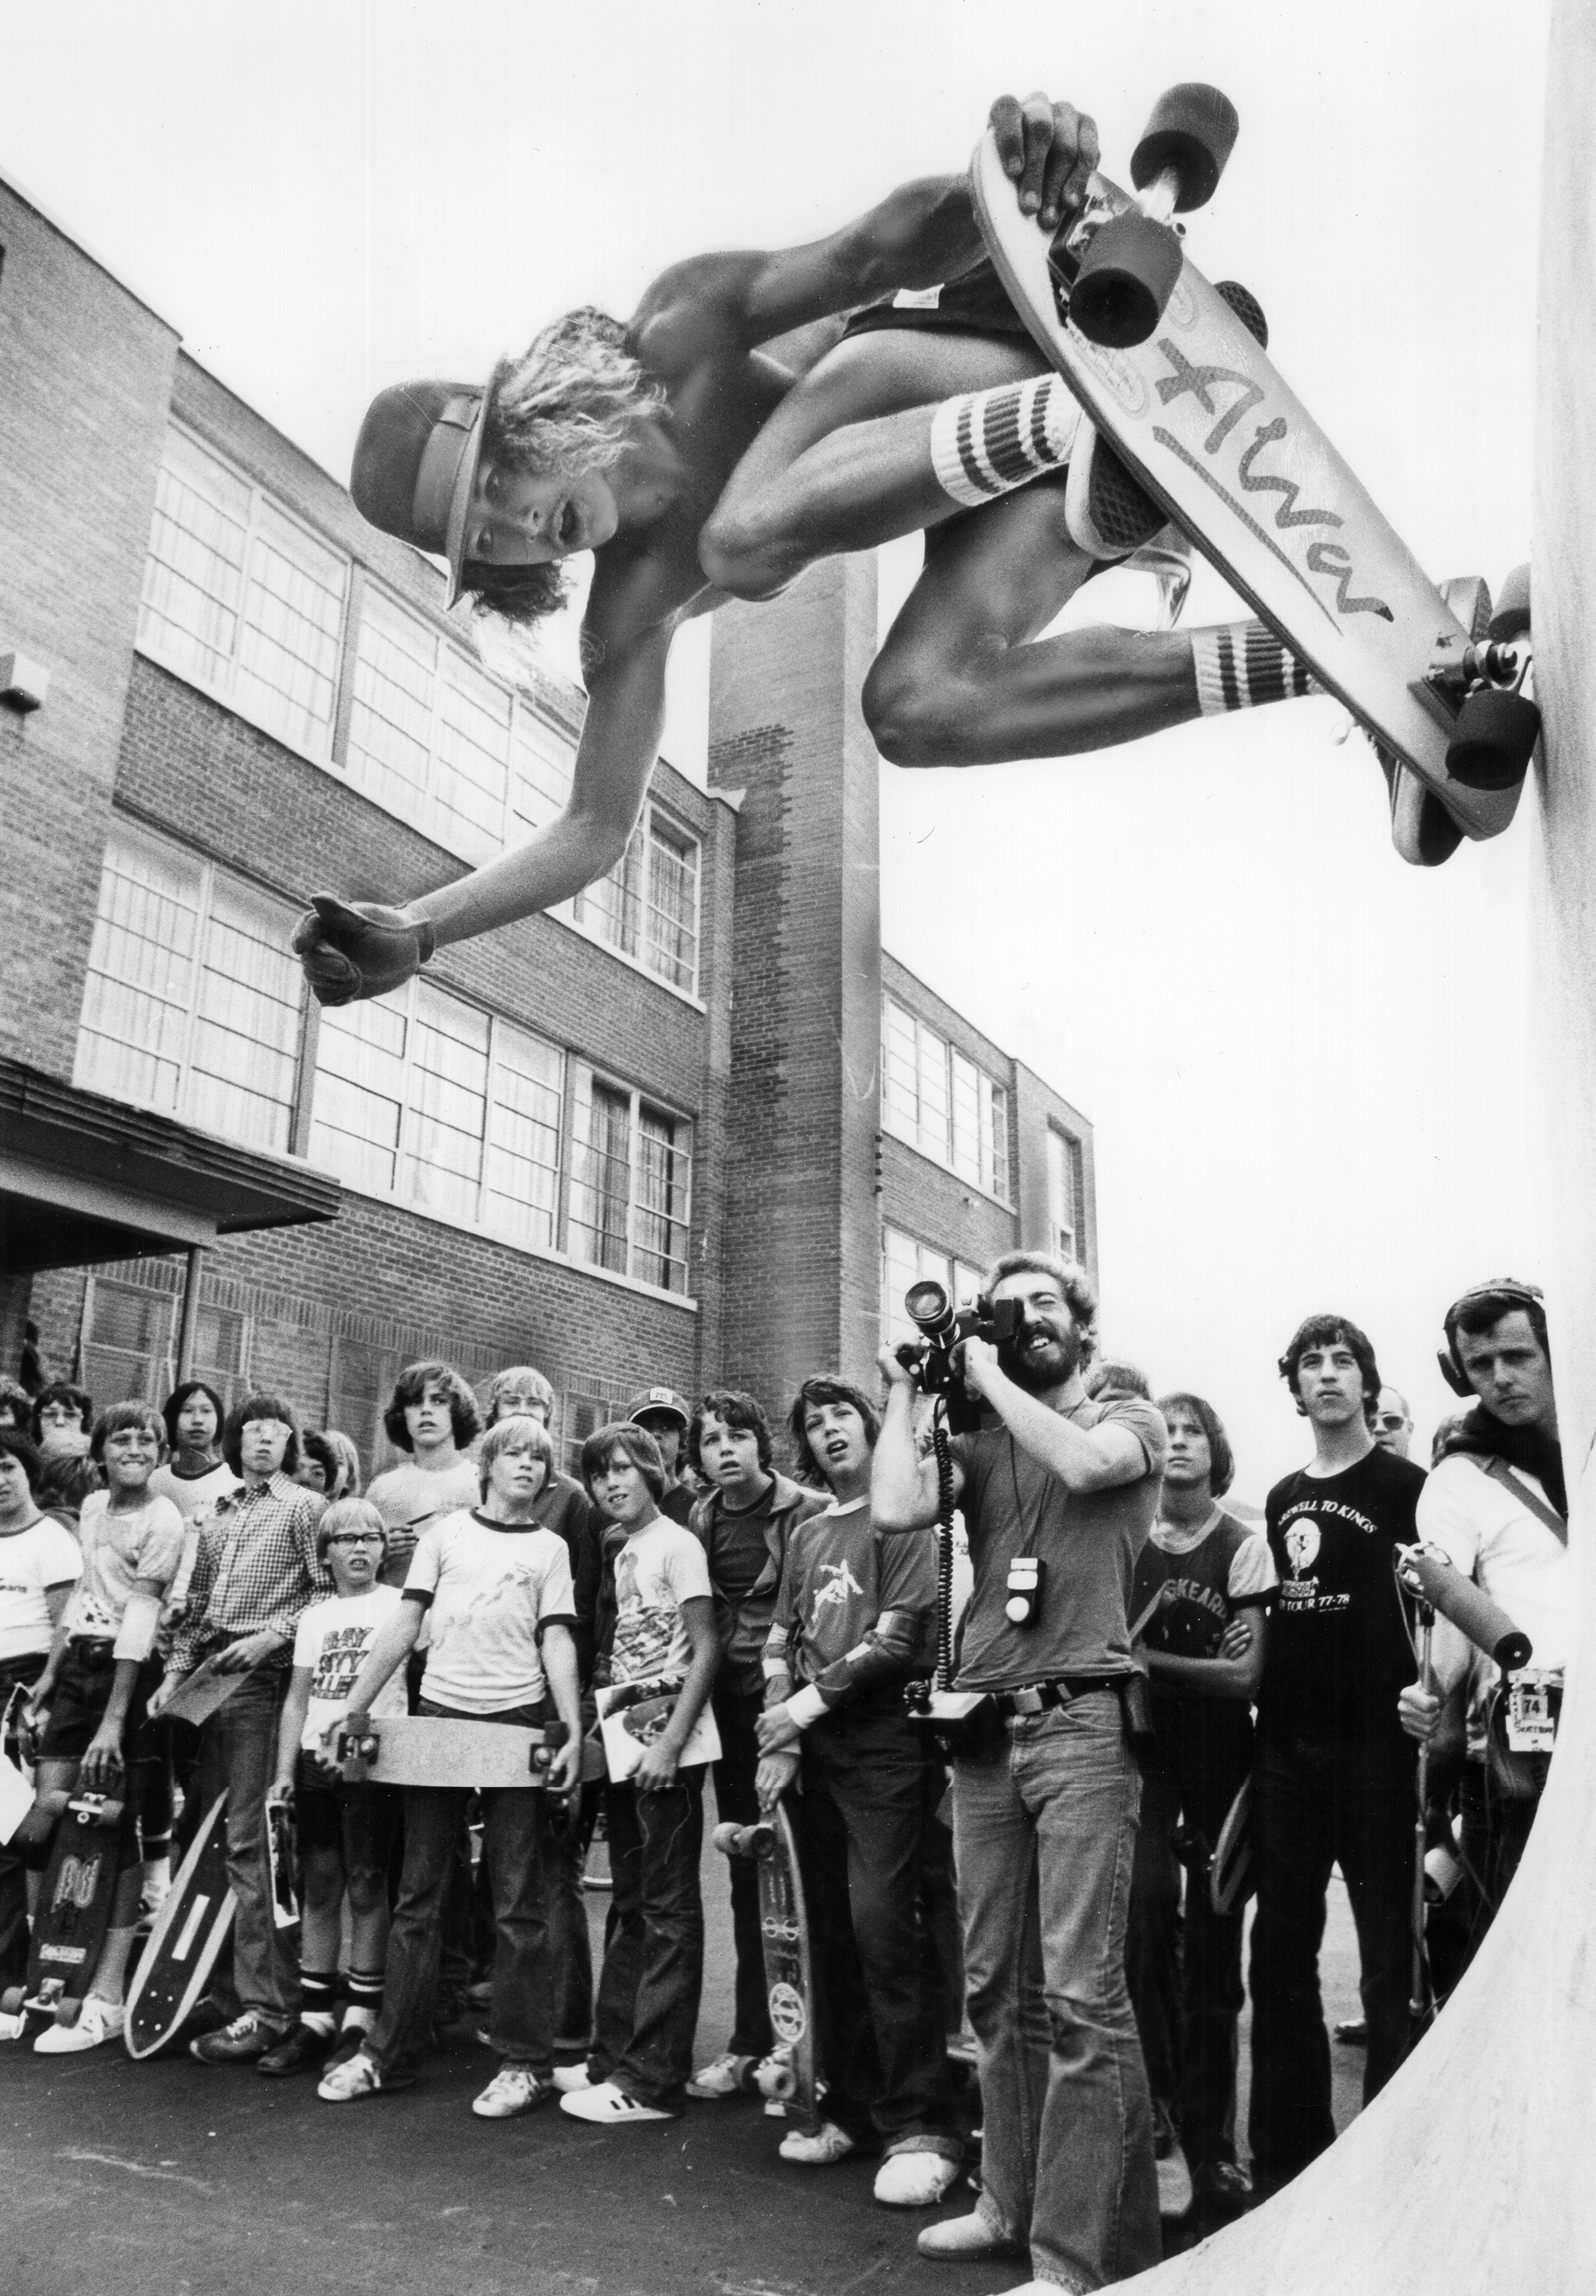 Professional skater Tony Alva skates in Toronto, Canada on Sept. 17, 1977.